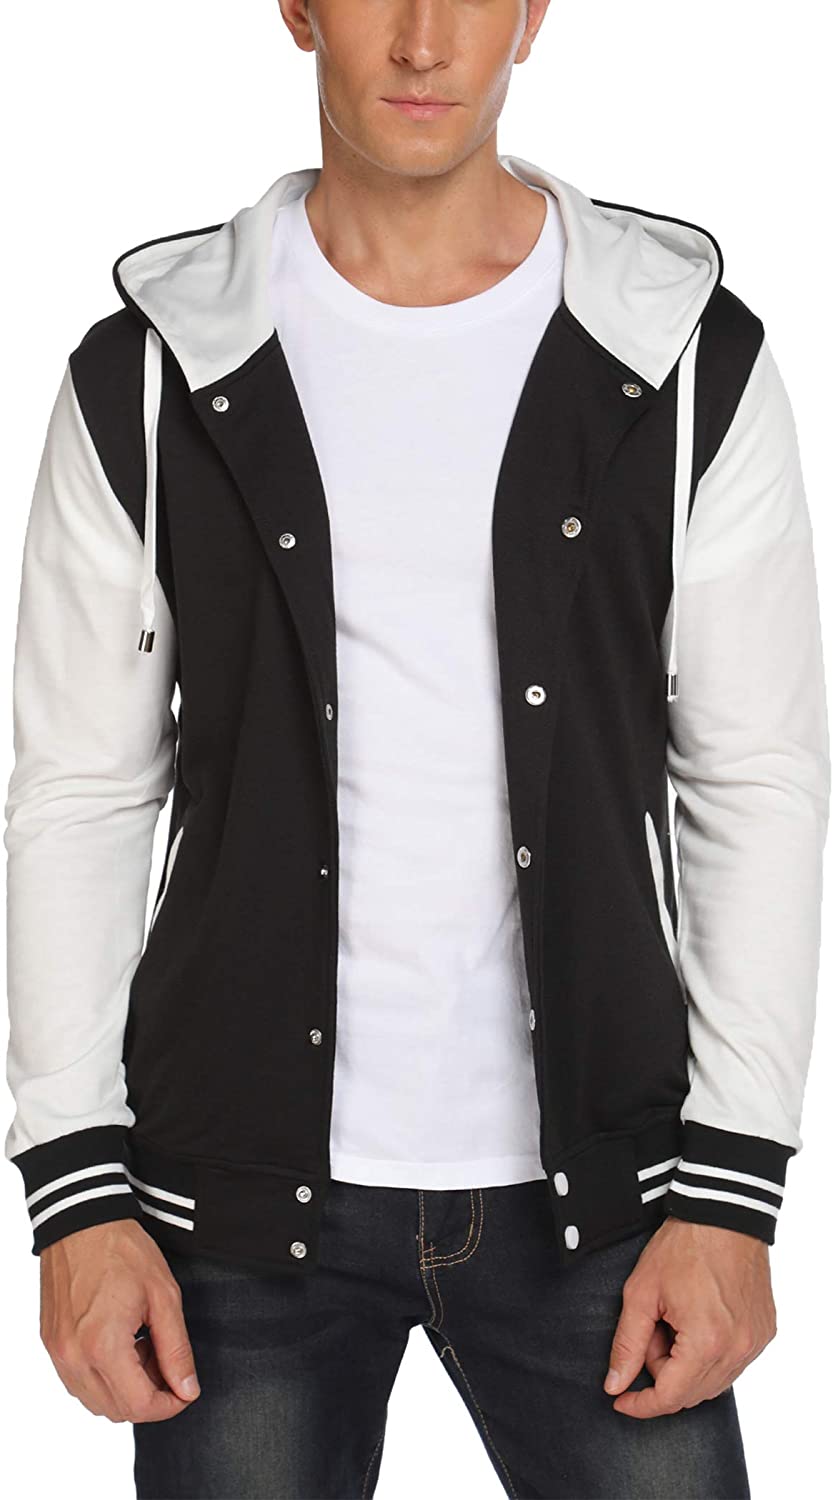 COOFANDY Mens Fashion Varsity Jacket Causal Slim Fit Cotton Bomber Jackets